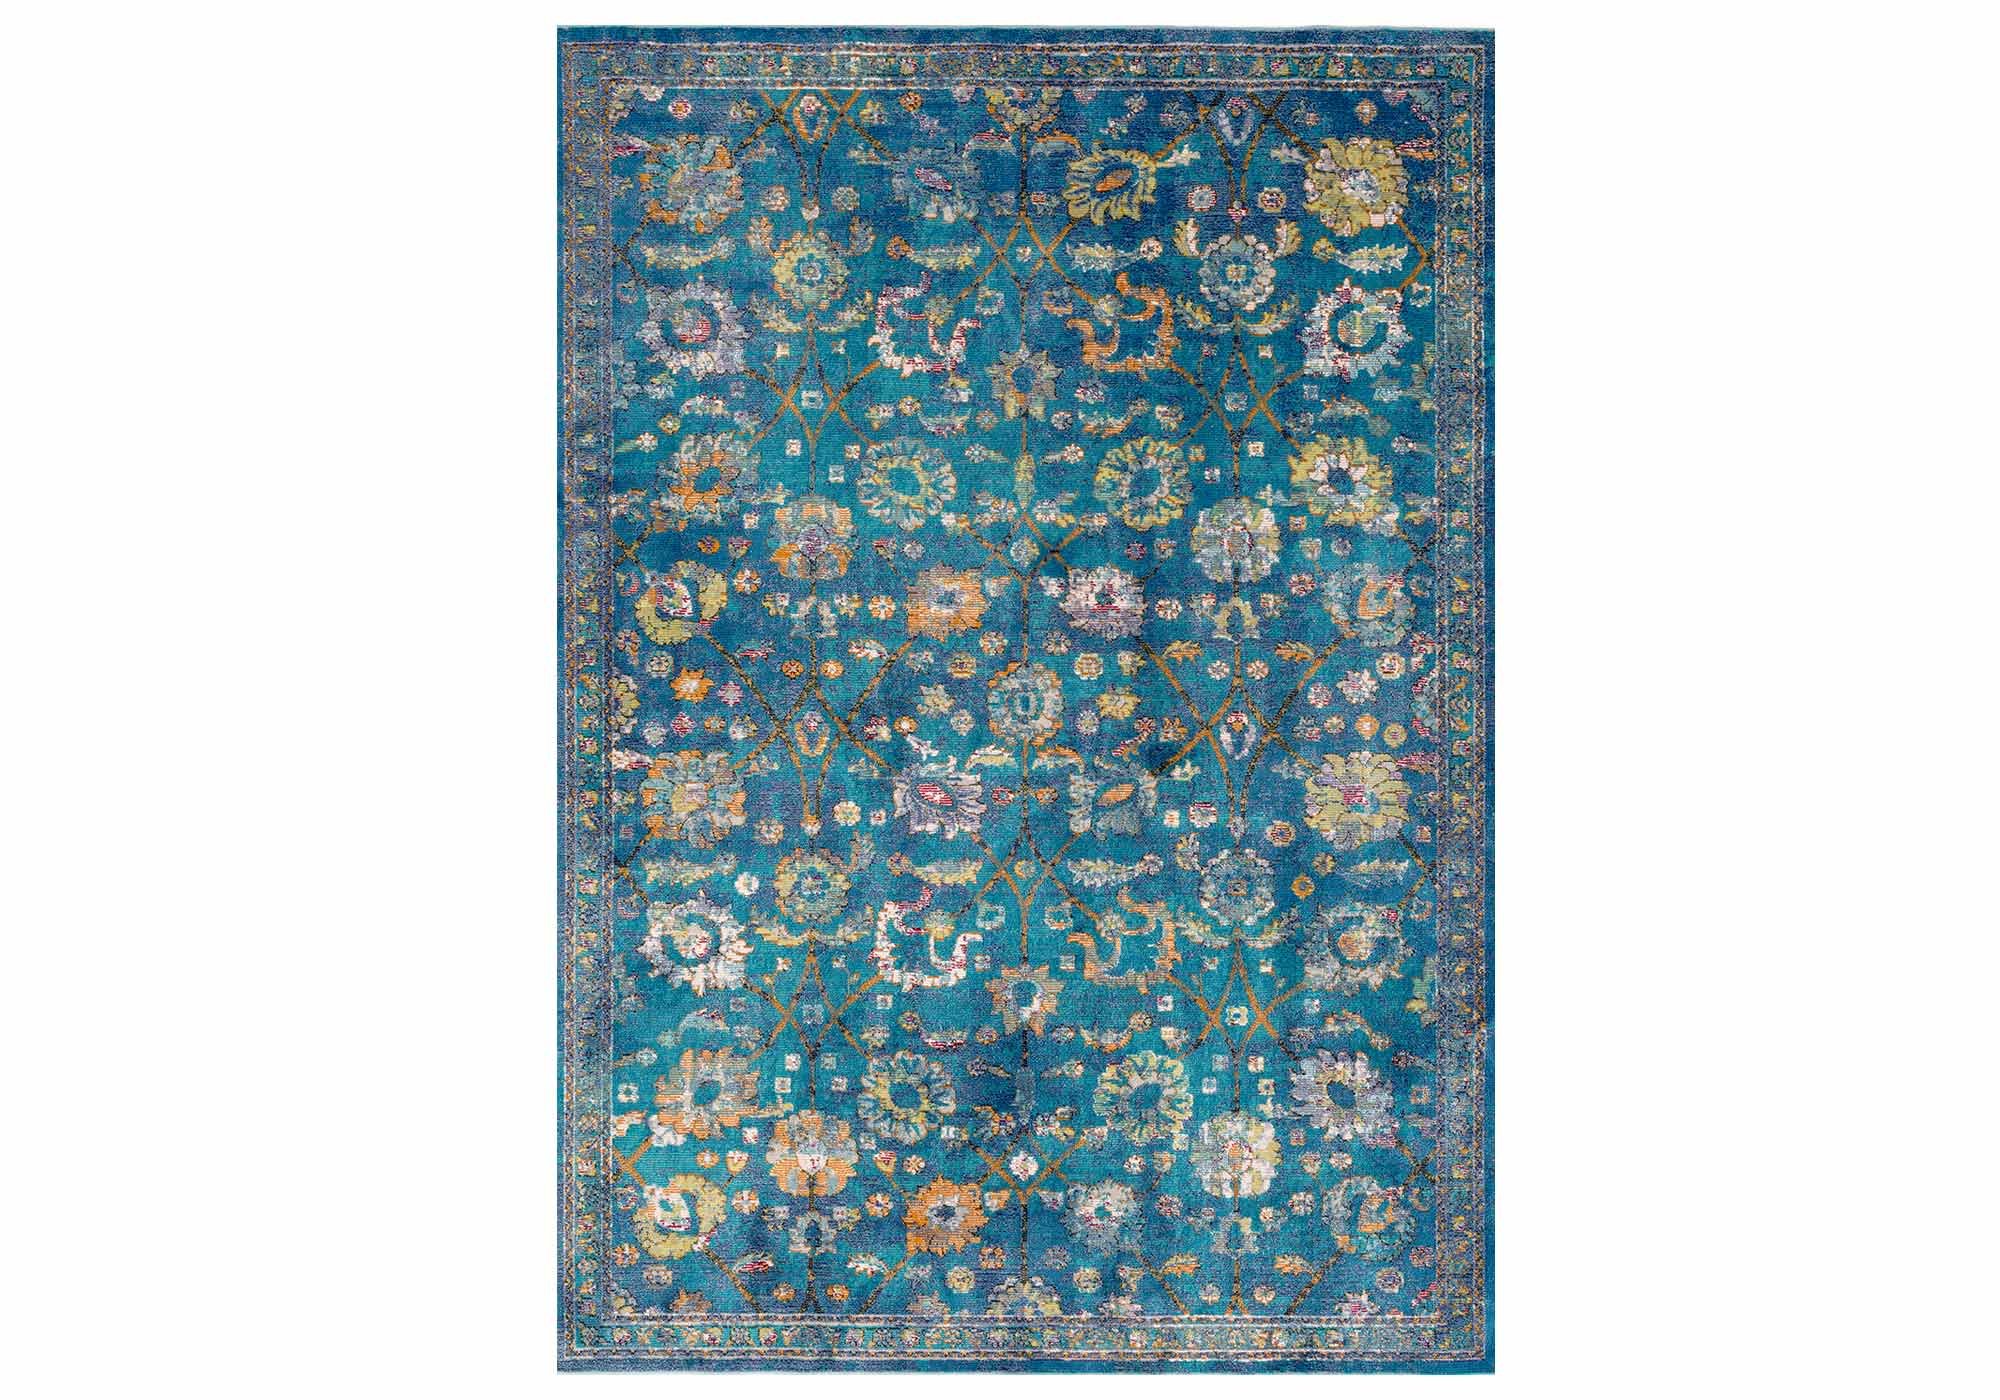 Festival Teppich 133 x 190 cm - mehrfarbig - 6 mm Florhöhe - Picasso 600